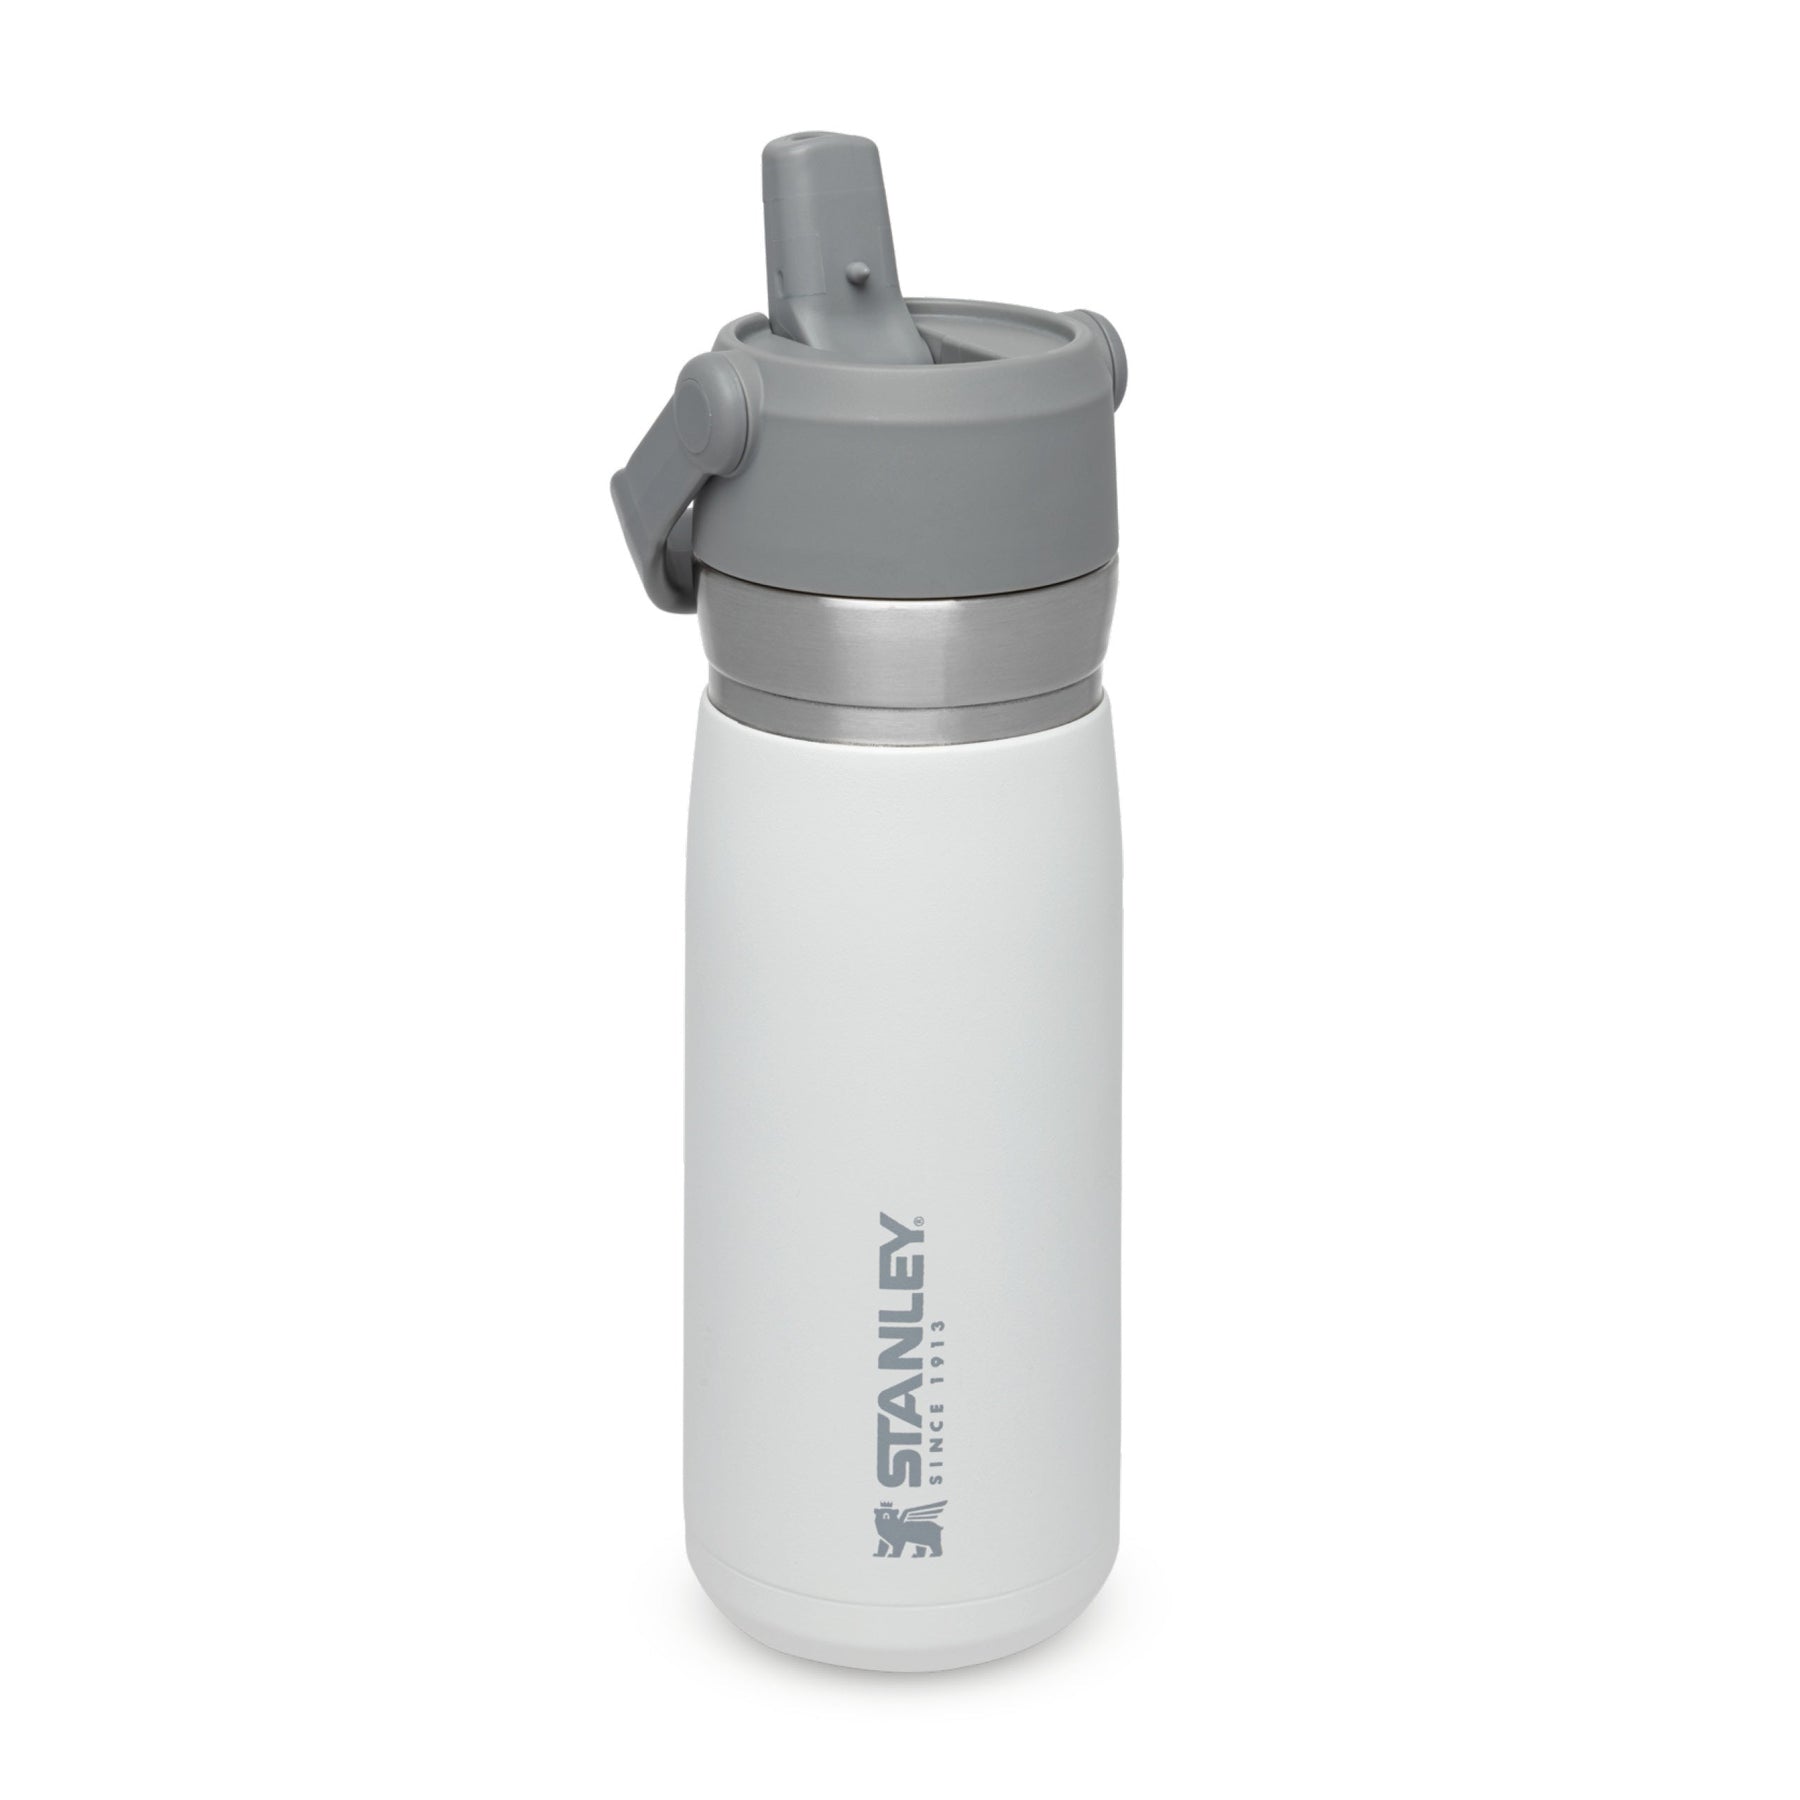 Water bottle, stainless steel, 650ml, Go Flip Straw, Polar